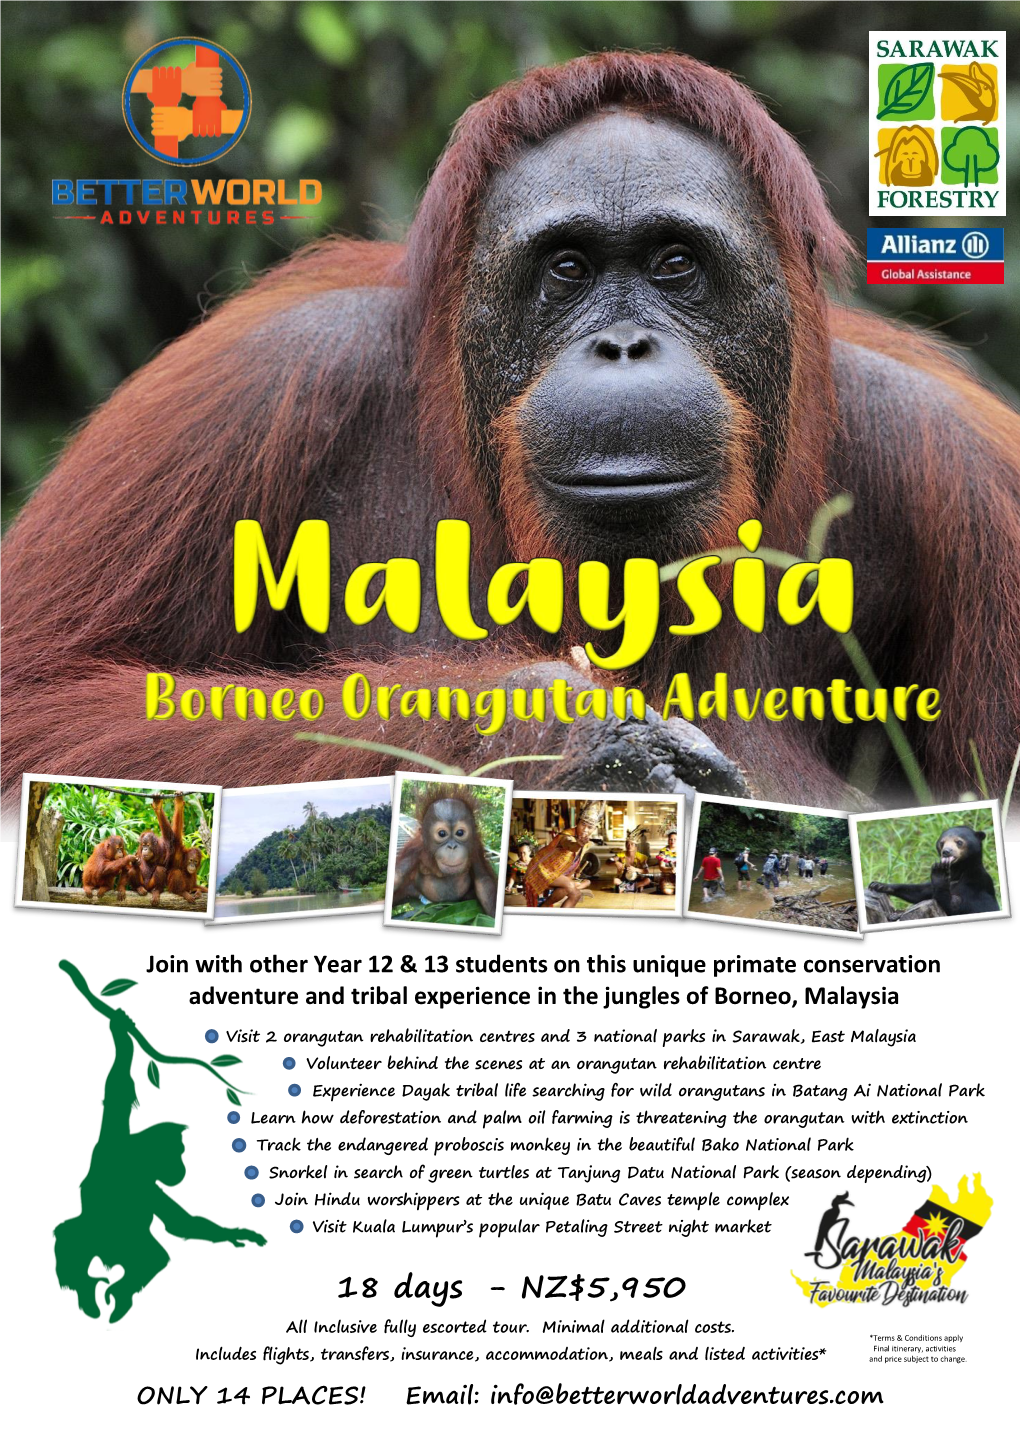 Borneo Orangutan Adventure Itinerary*